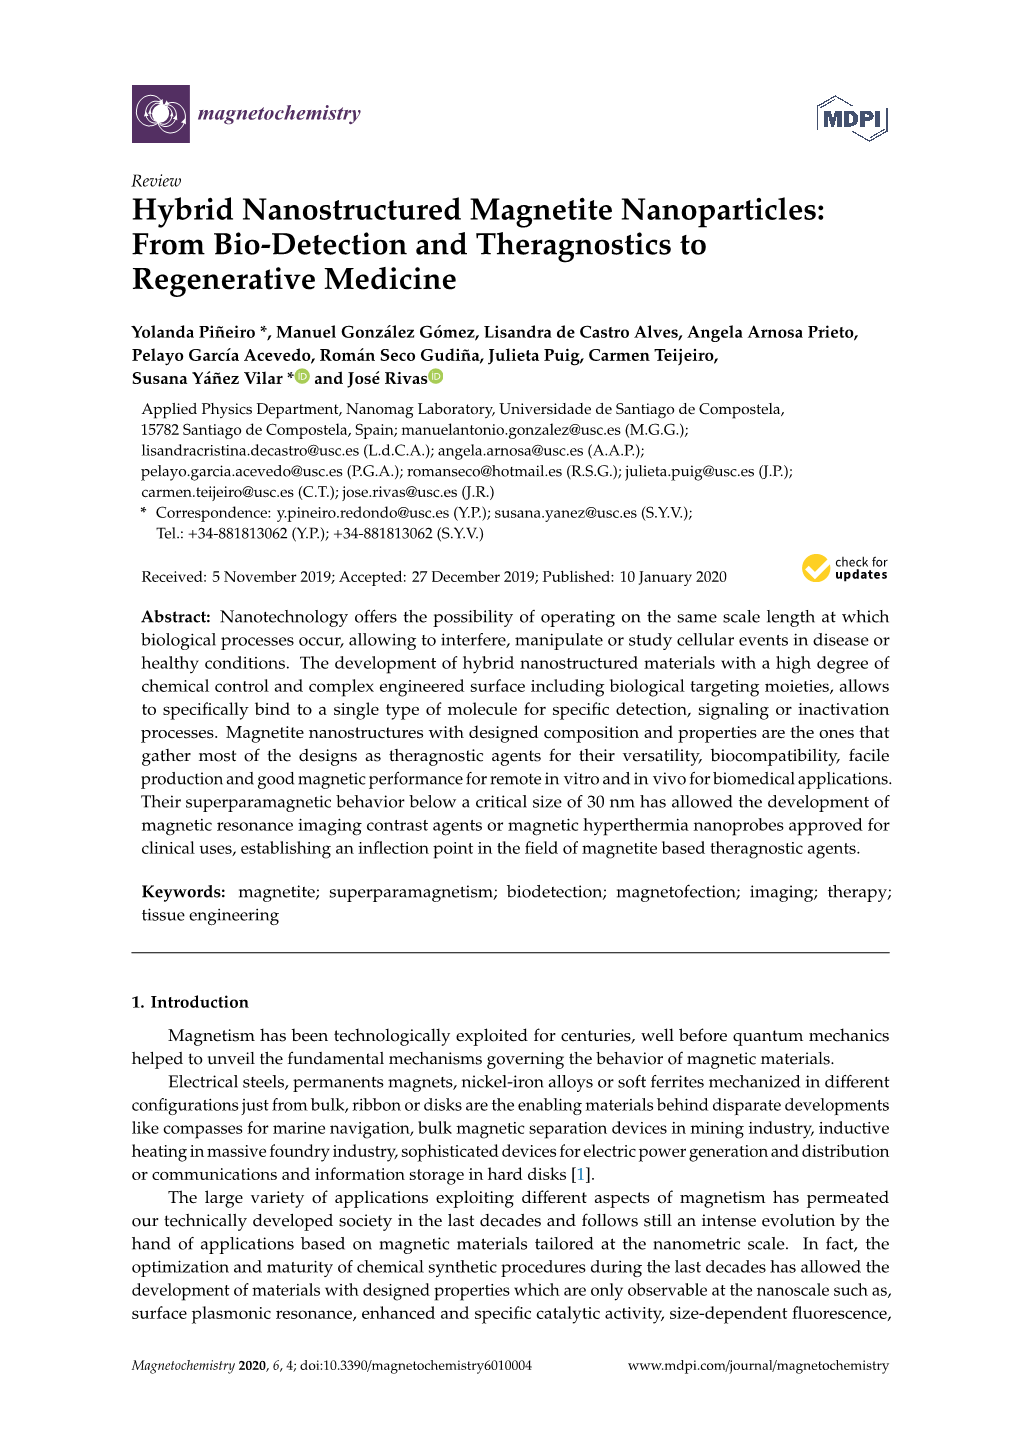 Hybrid Nanostructured Magnetite Nanoparticles: from Bio-Detection and Theragnostics to Regenerative Medicine